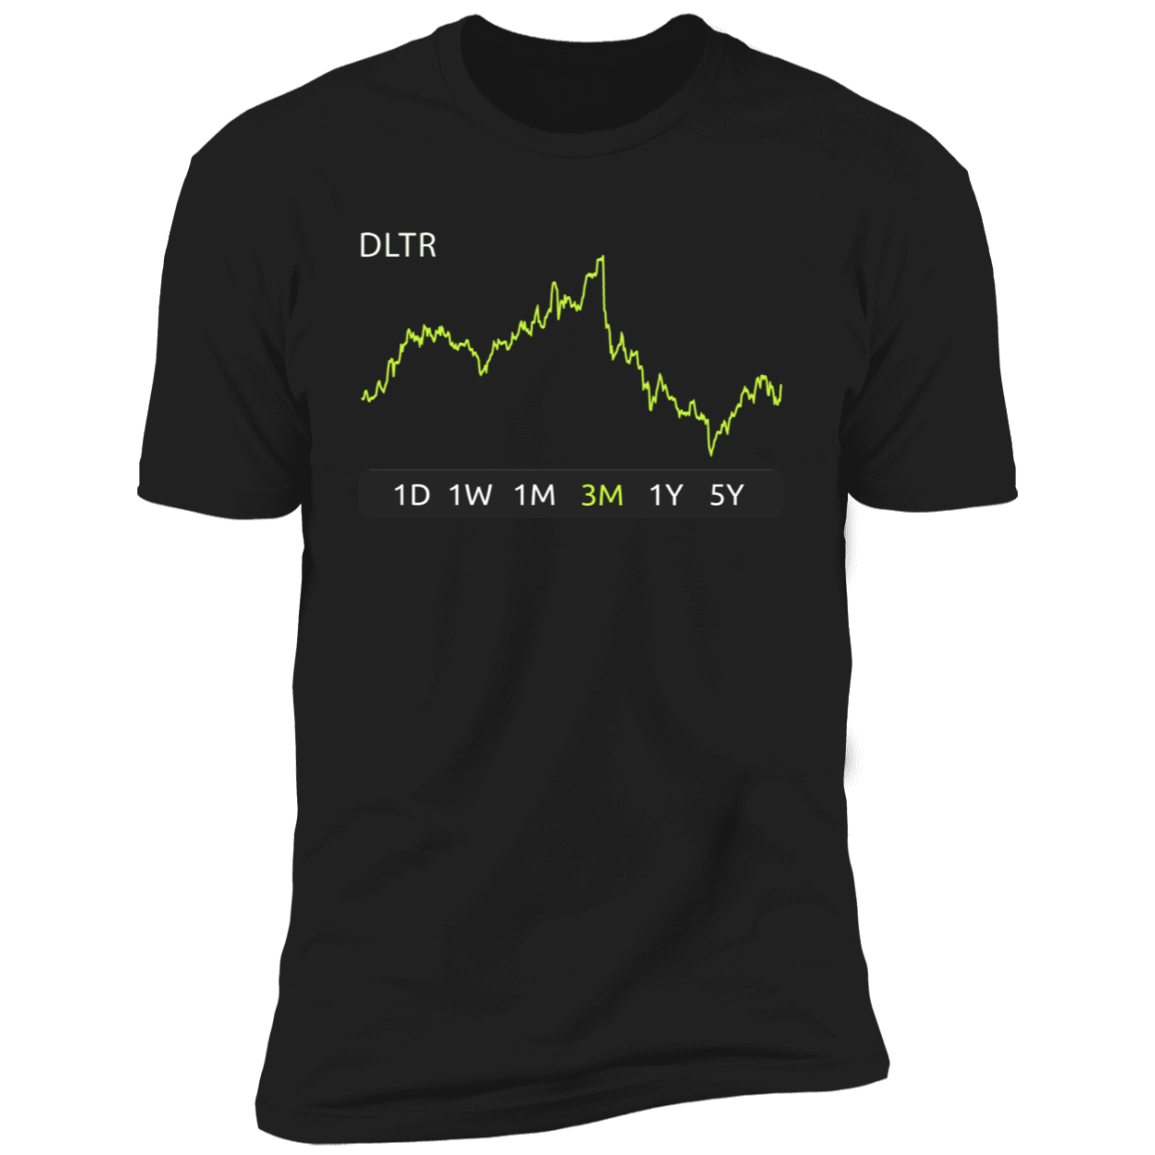 DLTR Stock 3m Premium T-Shirt